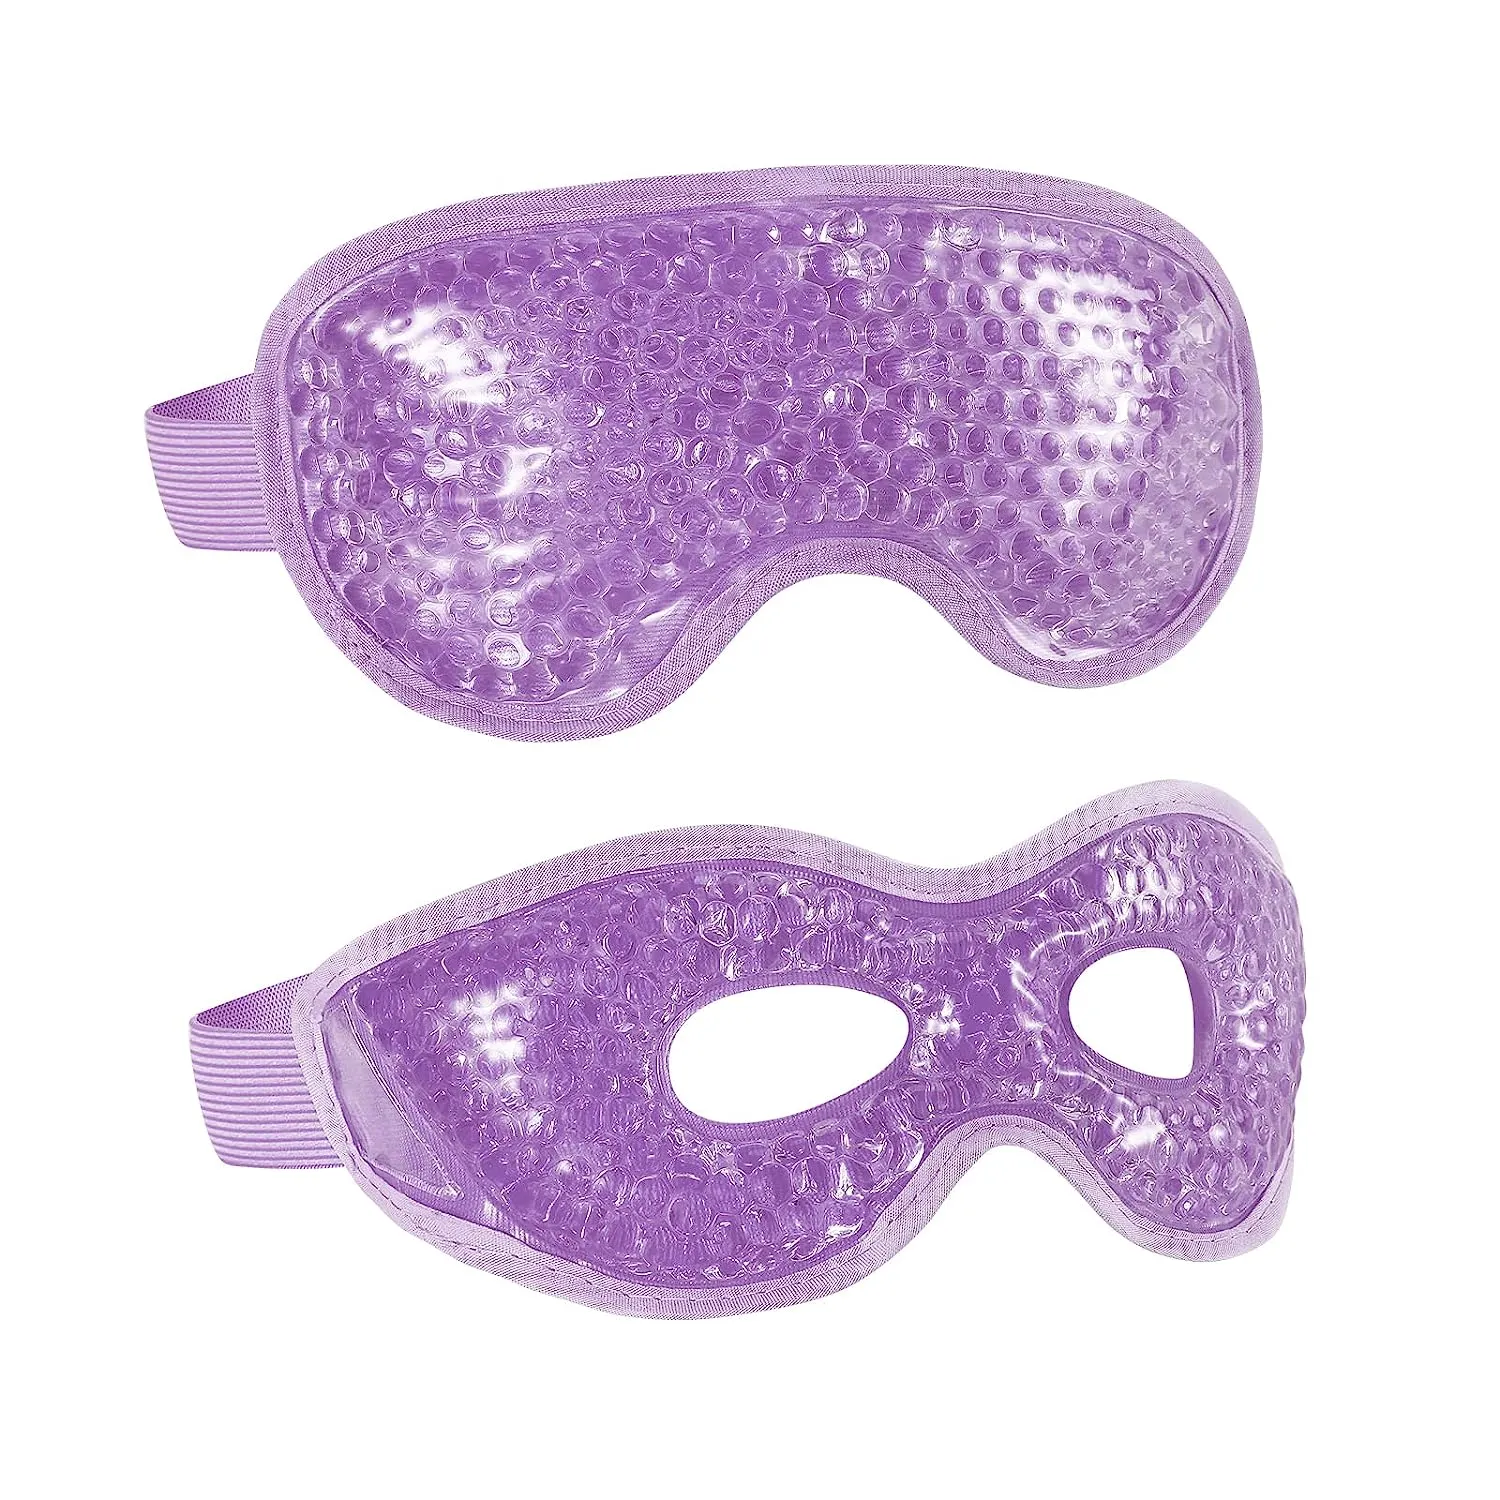 2pcsセットジェルアイマスクコールドコンプレスジェルビーズアイマスク再利用可能な冷却アイスマスク腫れのための暗い円のために